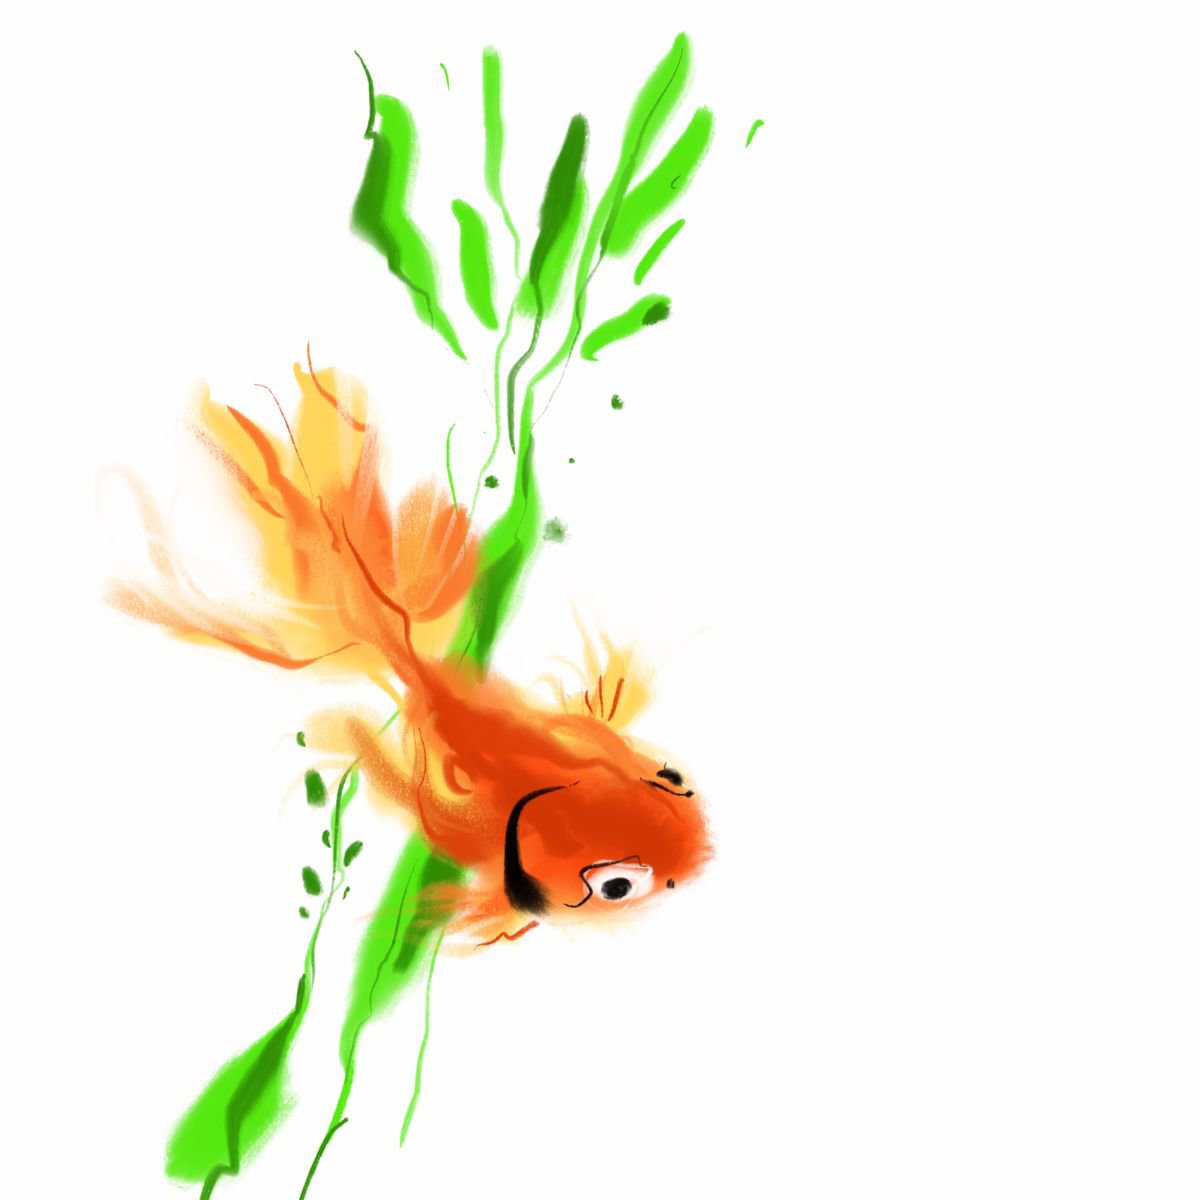 Goldfish #1 by Steve Deer